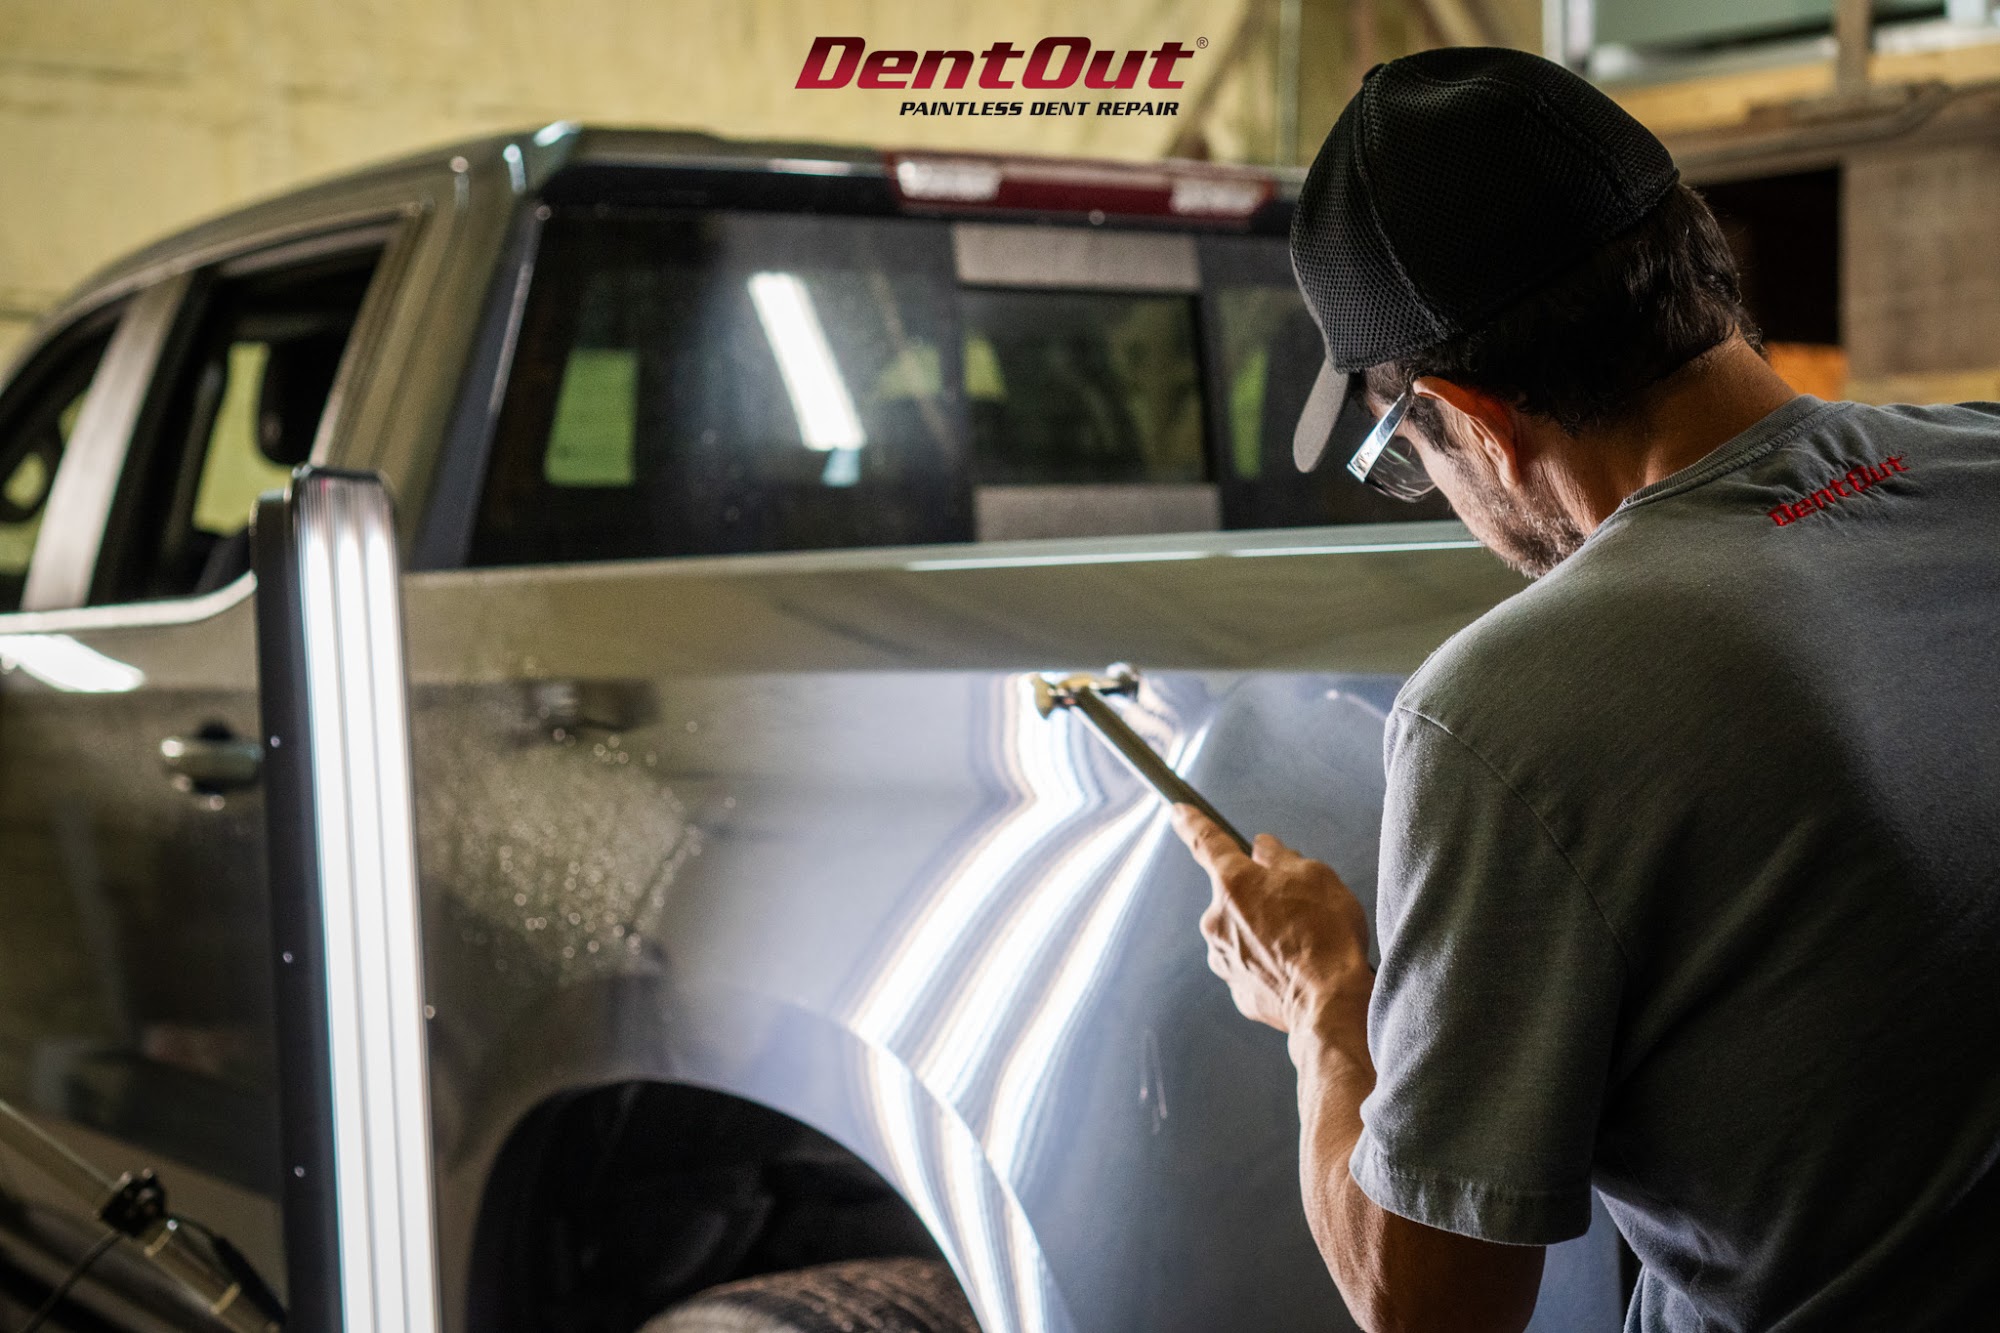 DentOut - Paintless Dent Repair